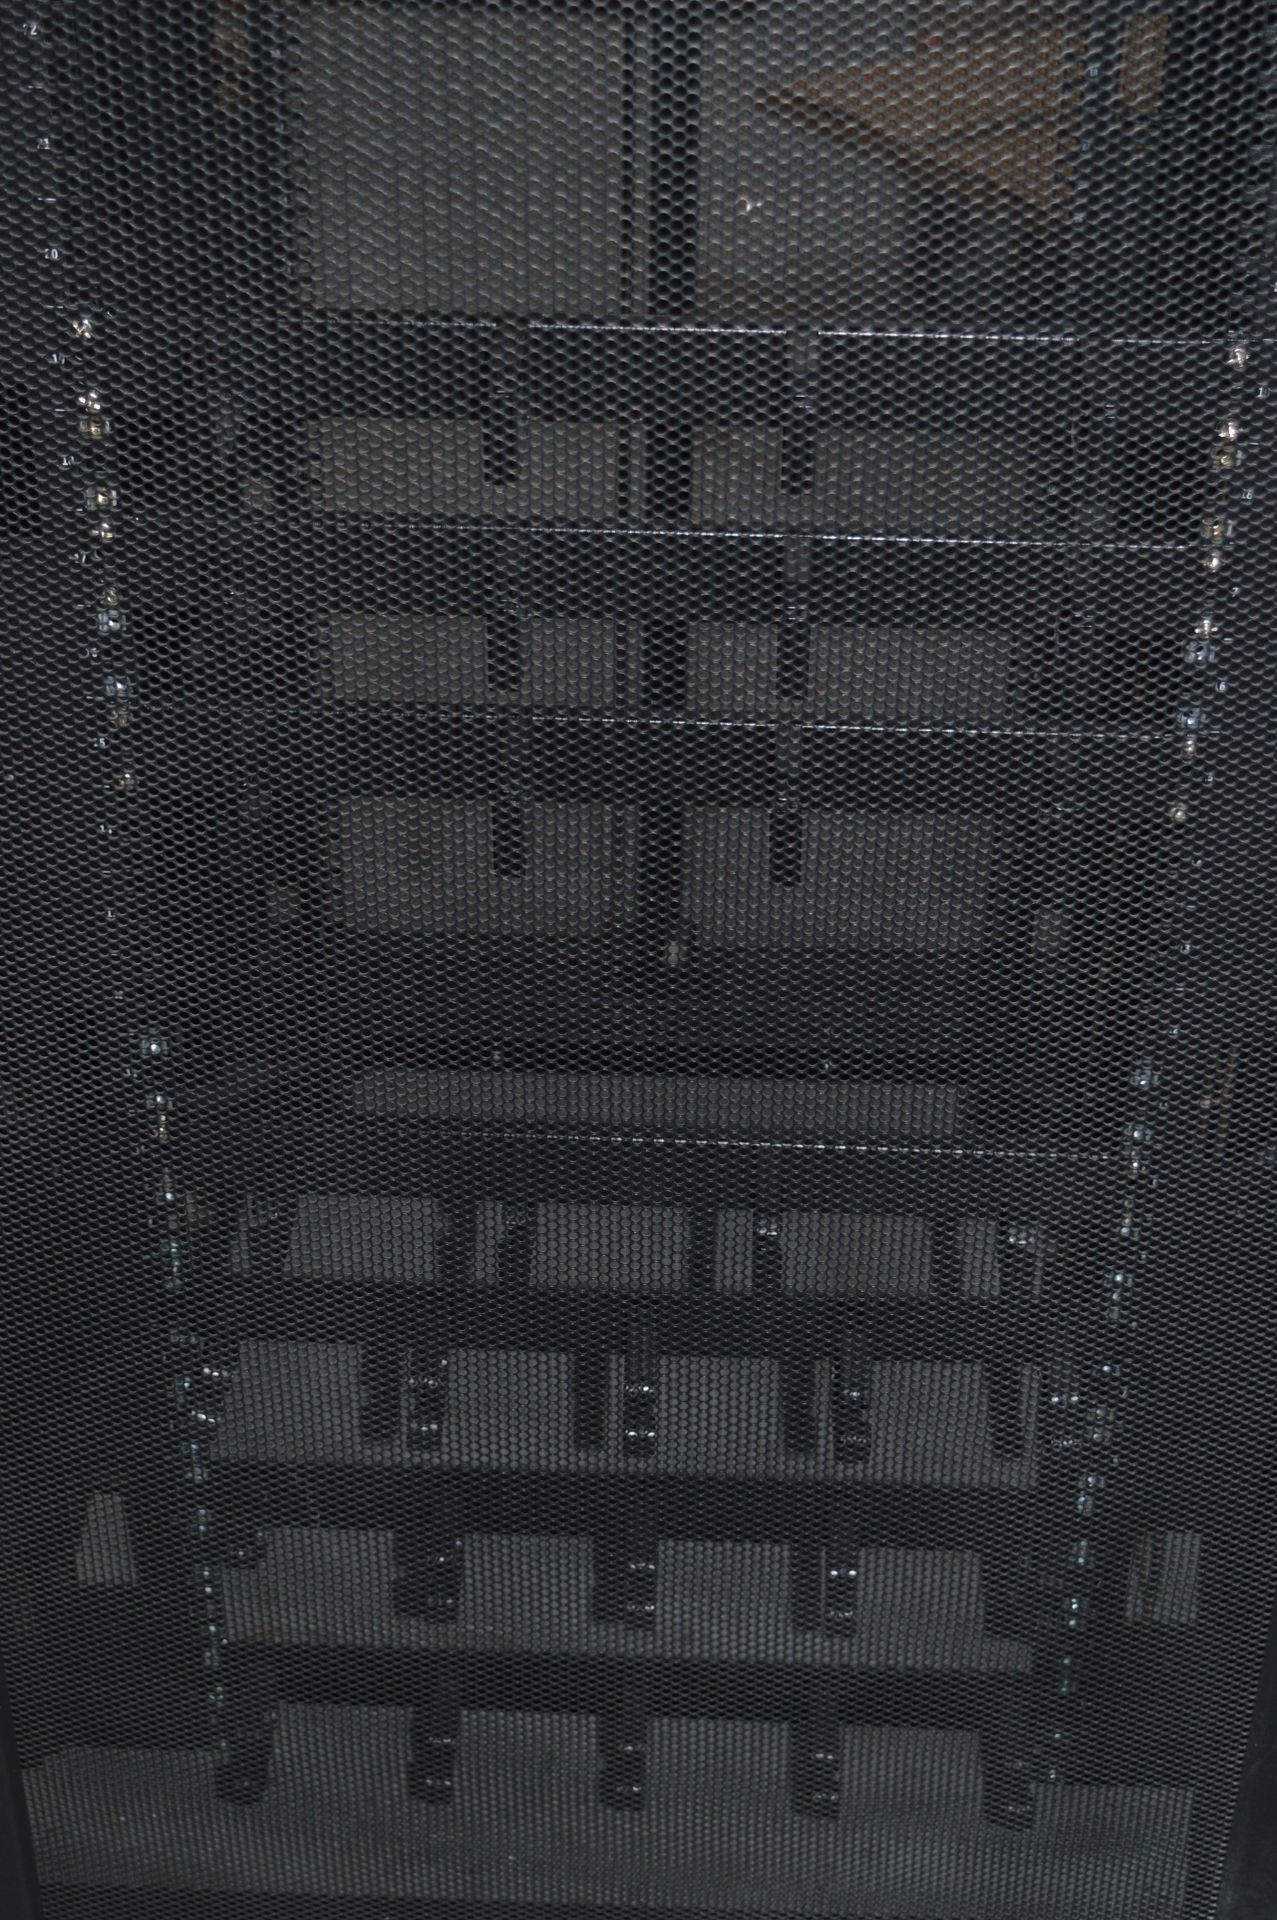 1 x APC Netshelter 42U Server Enclosure - AR3100 Black - Suitable For 19 Inch Compliant - Image 6 of 6